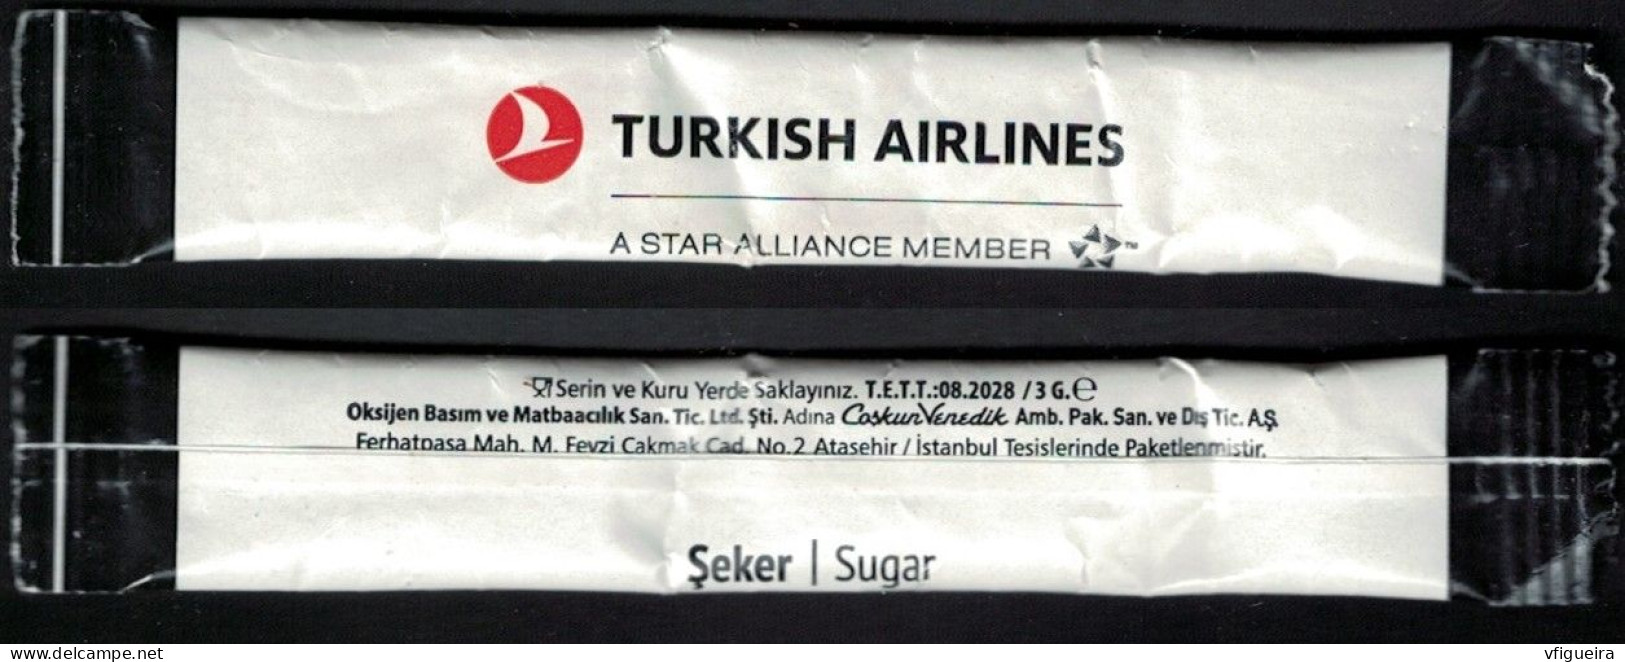 Turquie Sachet Sucre Sugar Bag Bûchette Turkish Airlines A Star Alliance Member - Sugars